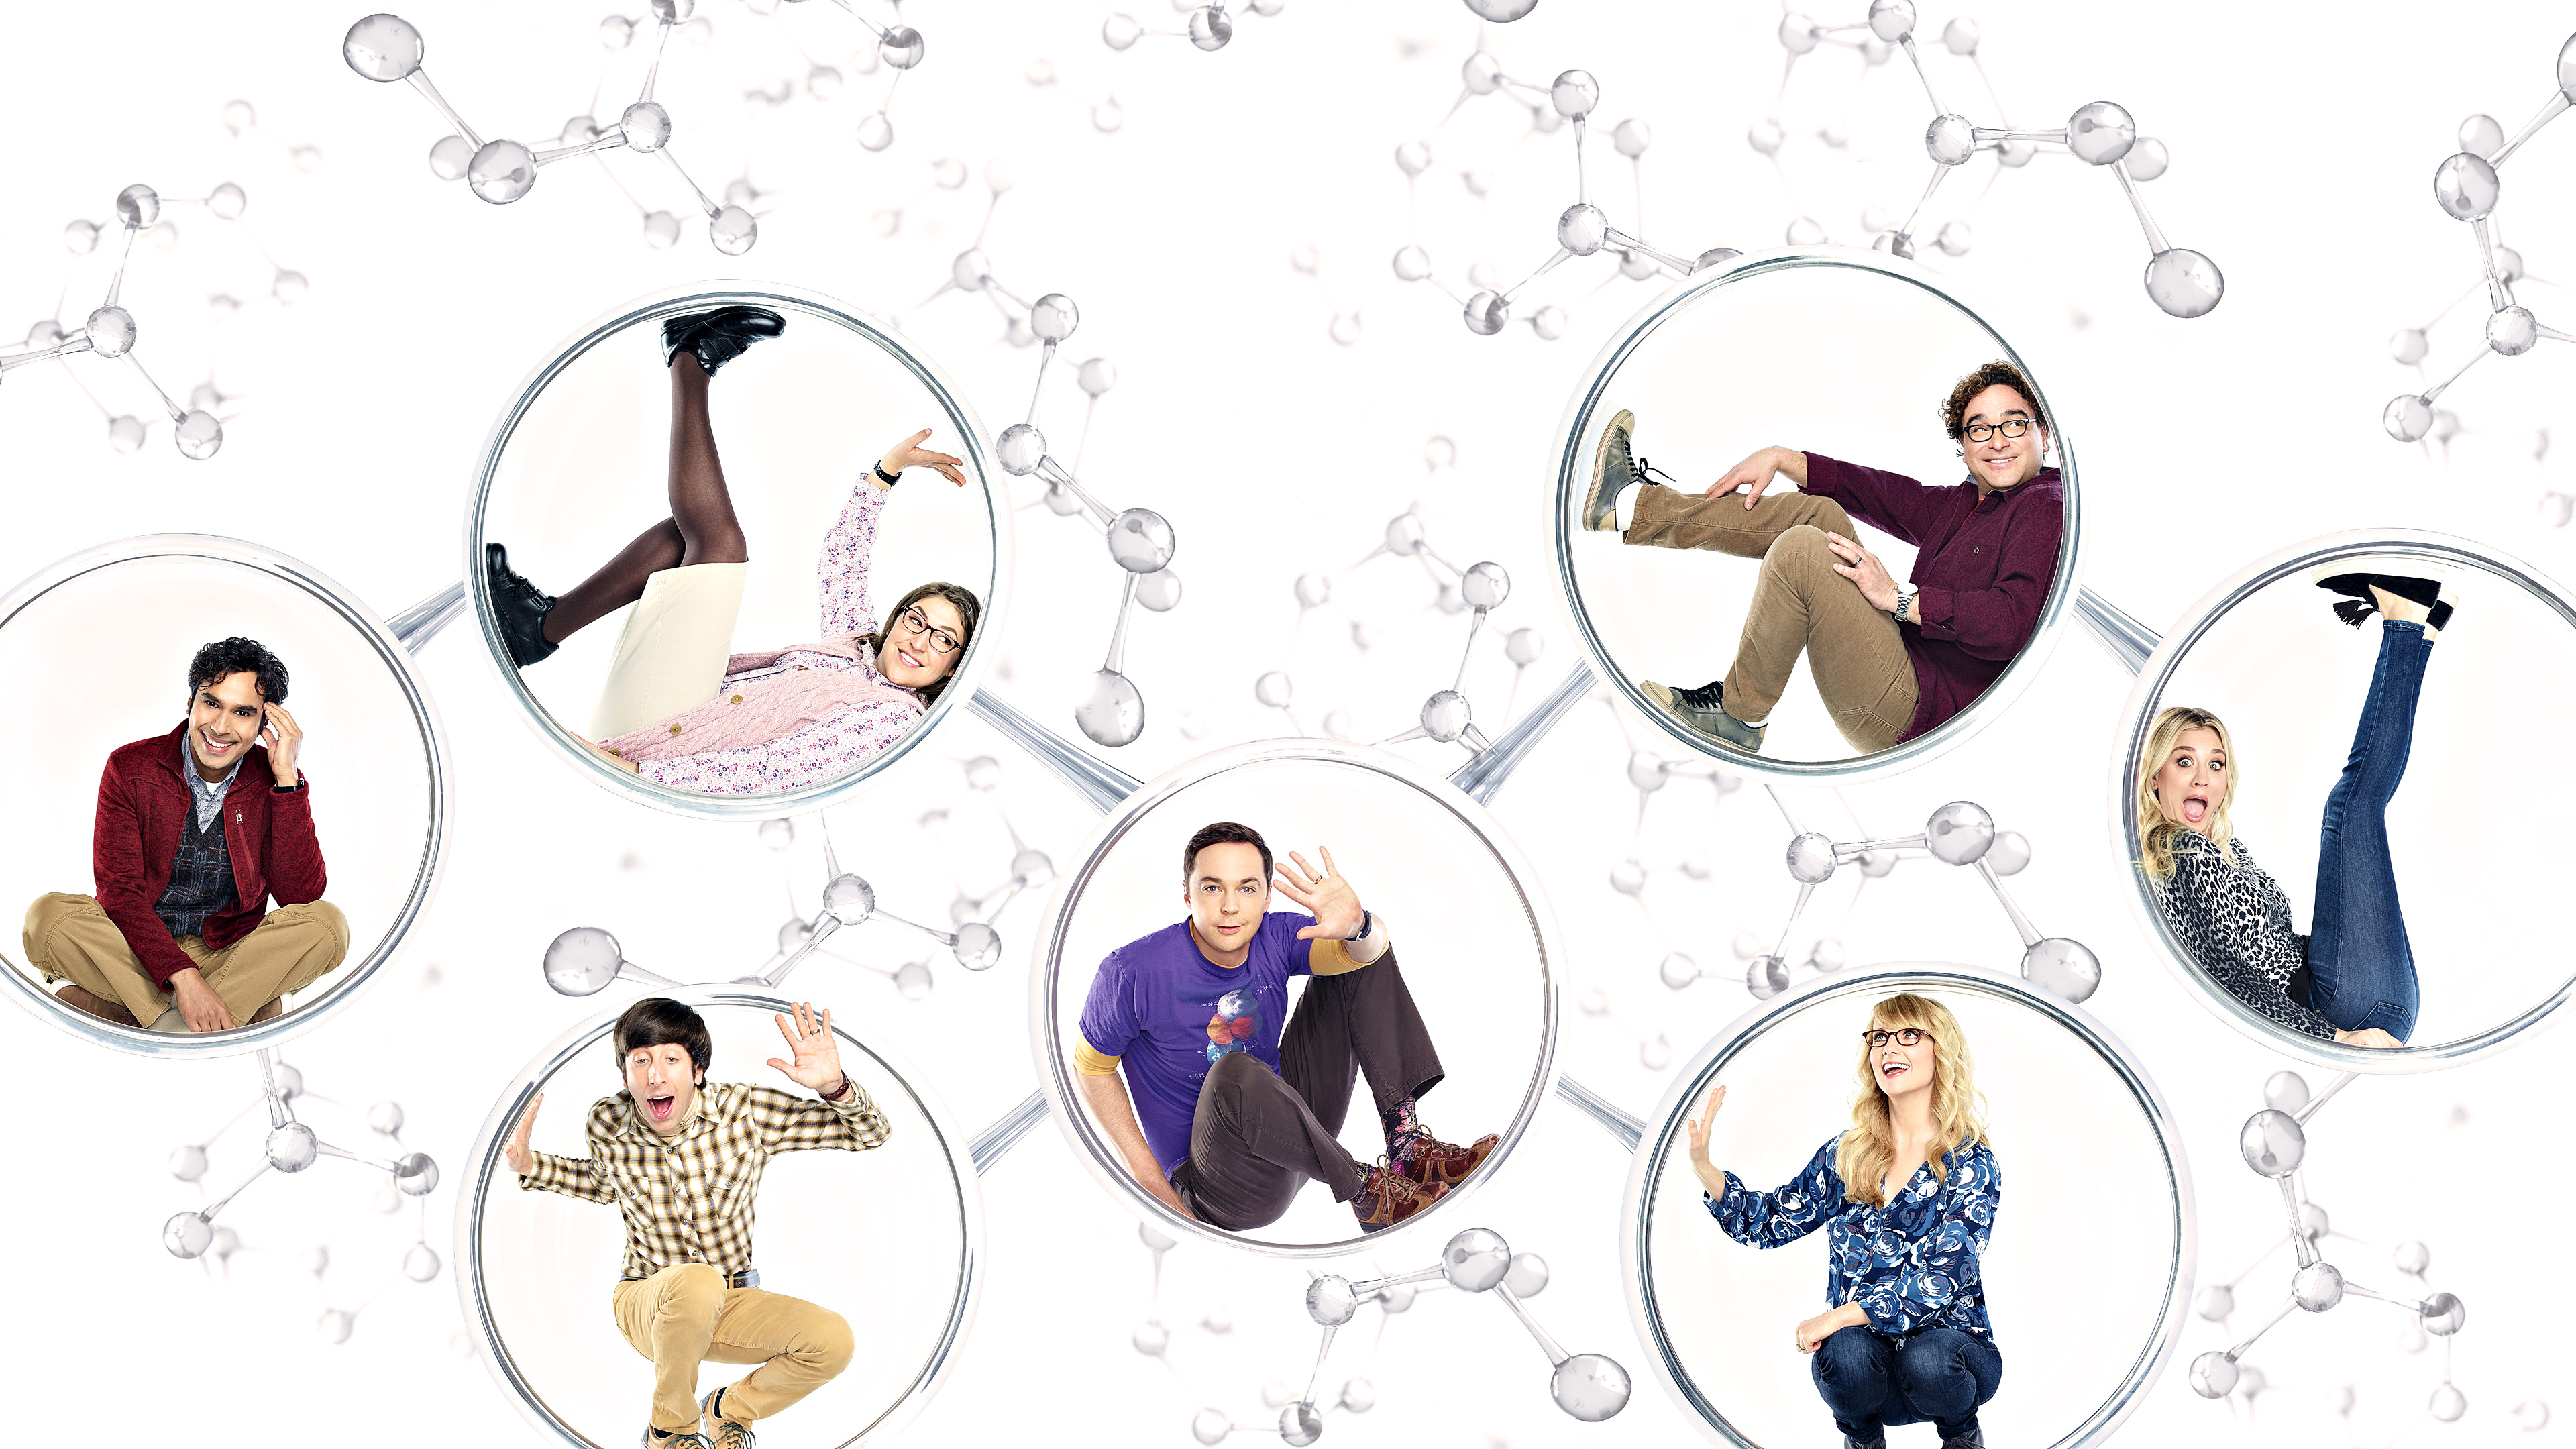 TV Show The Big Bang Theory 4k Ultra HD Wallpaper